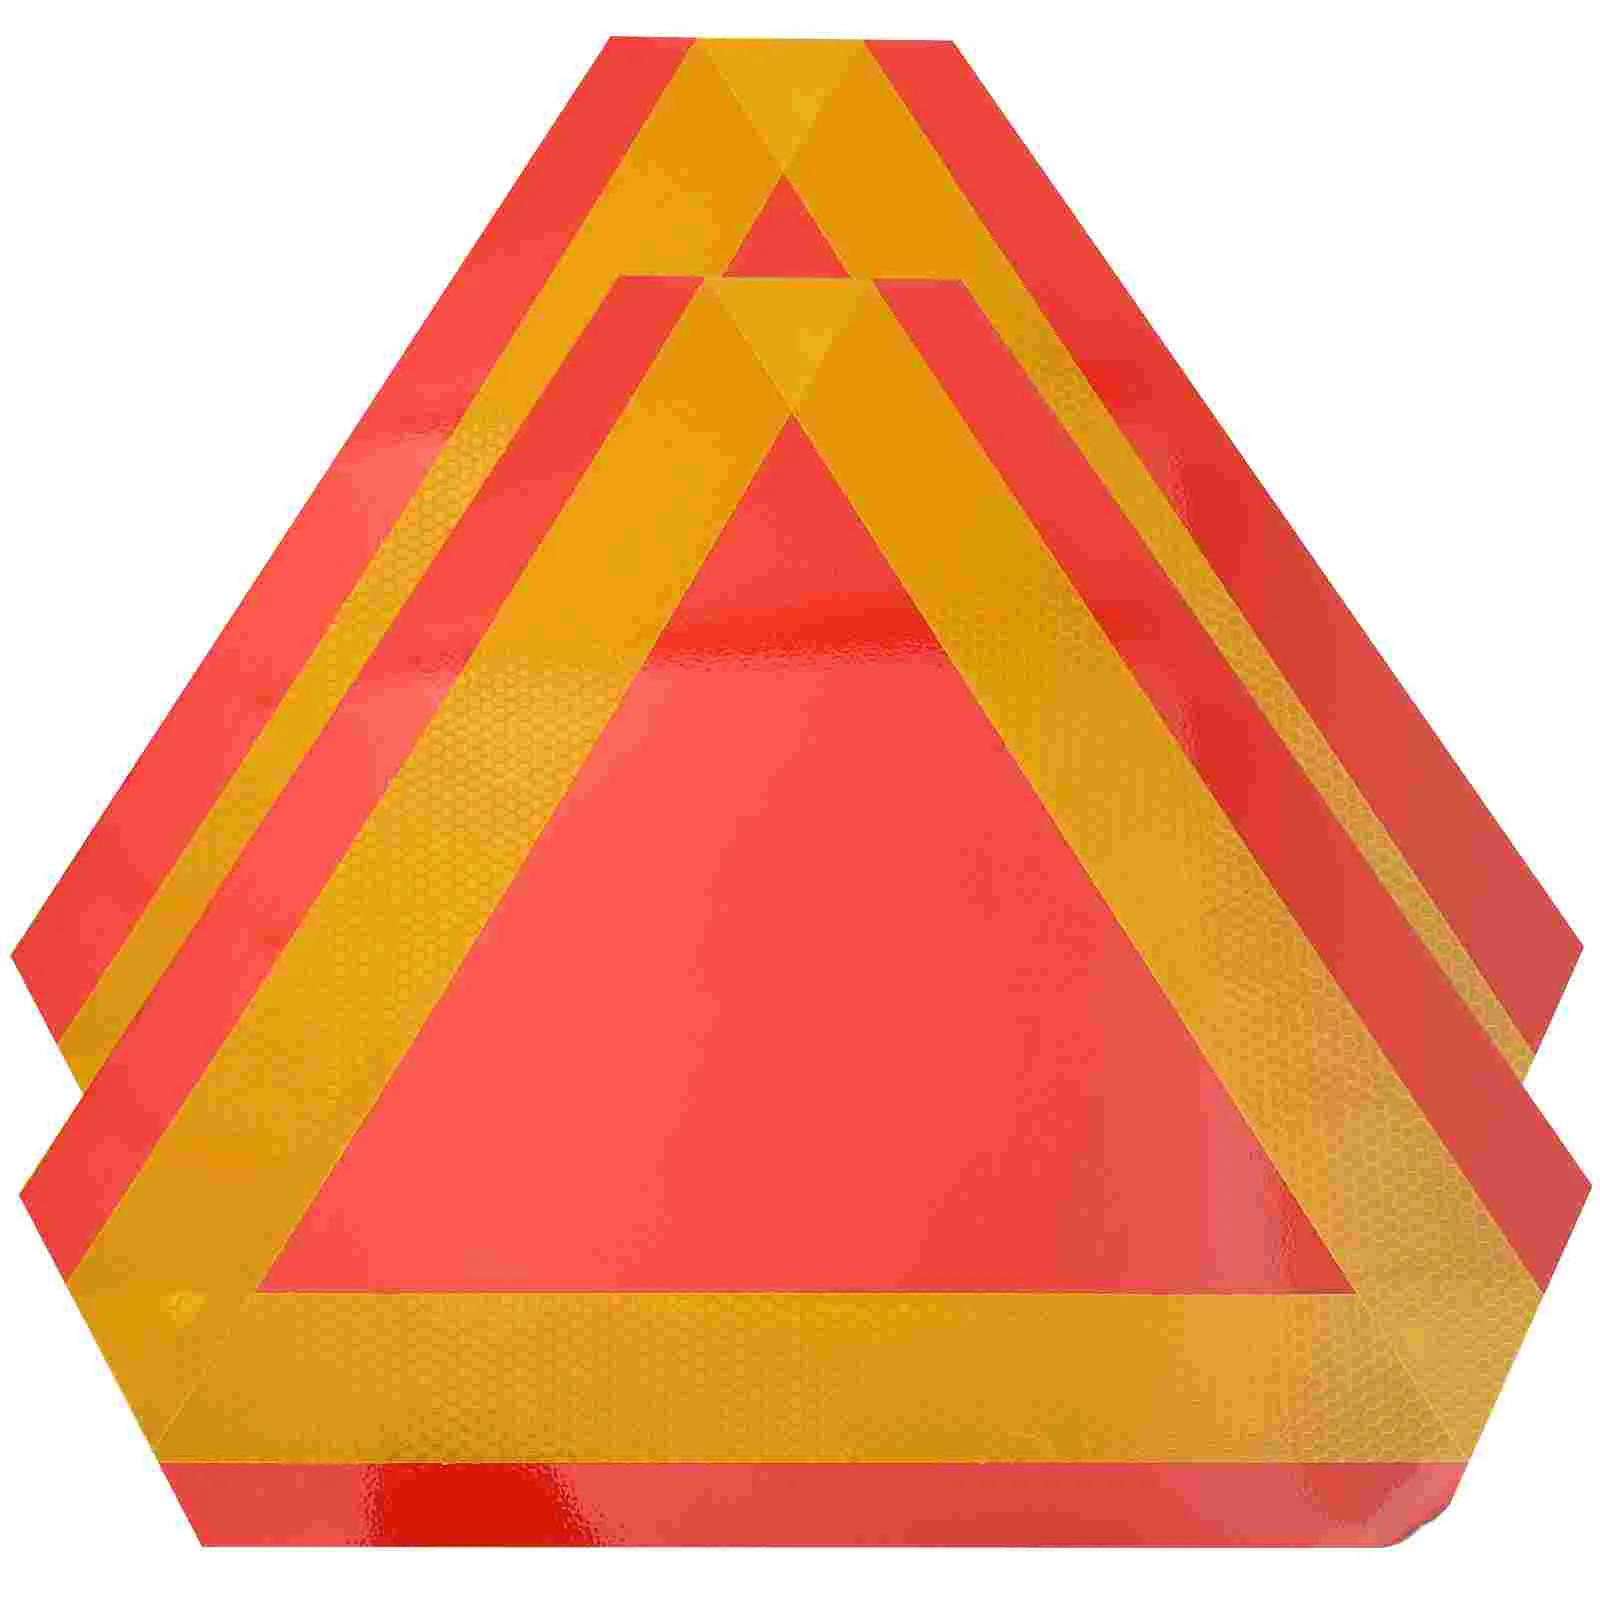 

2 Pcs Triangular Reflector Triangle Reflectors Safety Sign Slow Moving Warning Car Emblem Tail Lift Accessory Vehicle